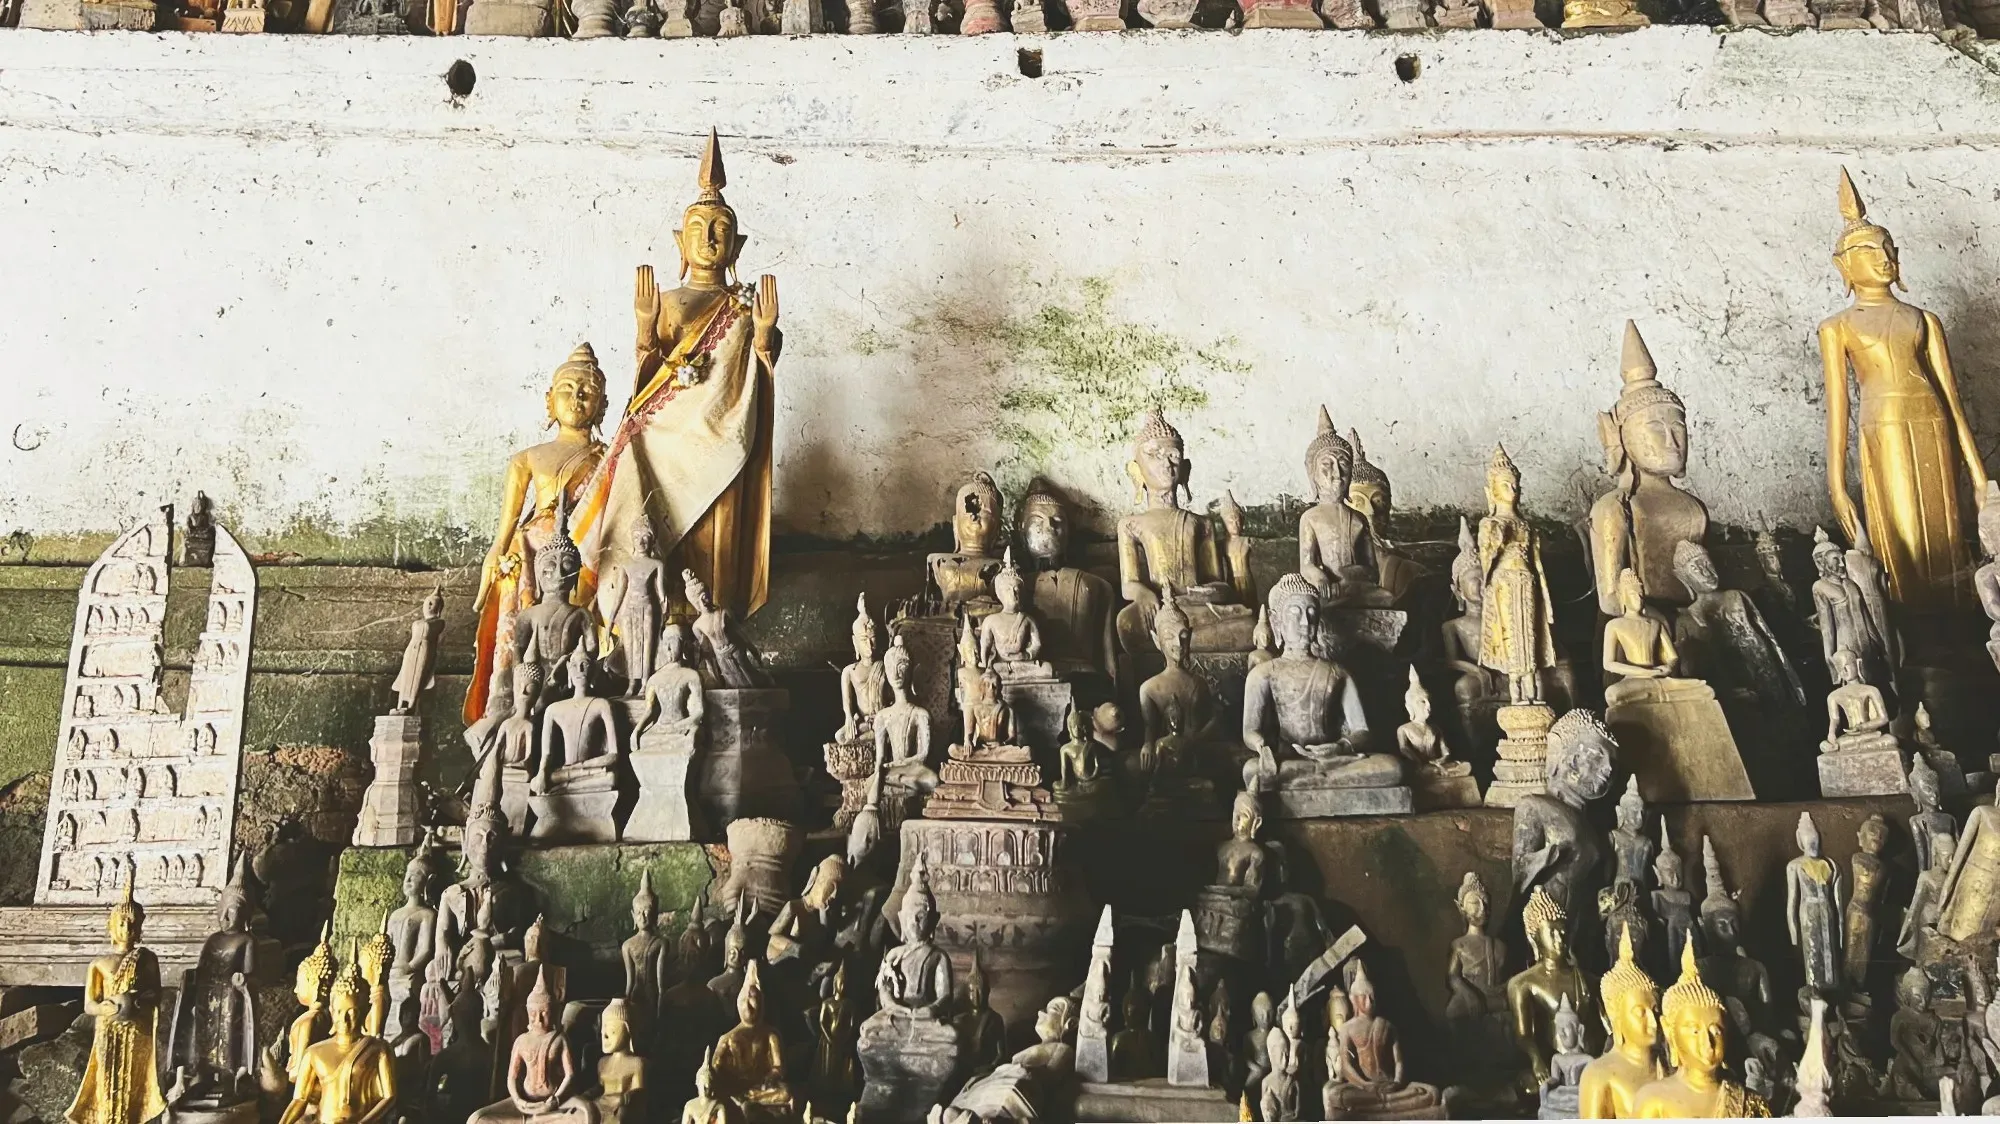 Many mini buddha statues in the "Buddha Caves" / Pak Ou Caves.